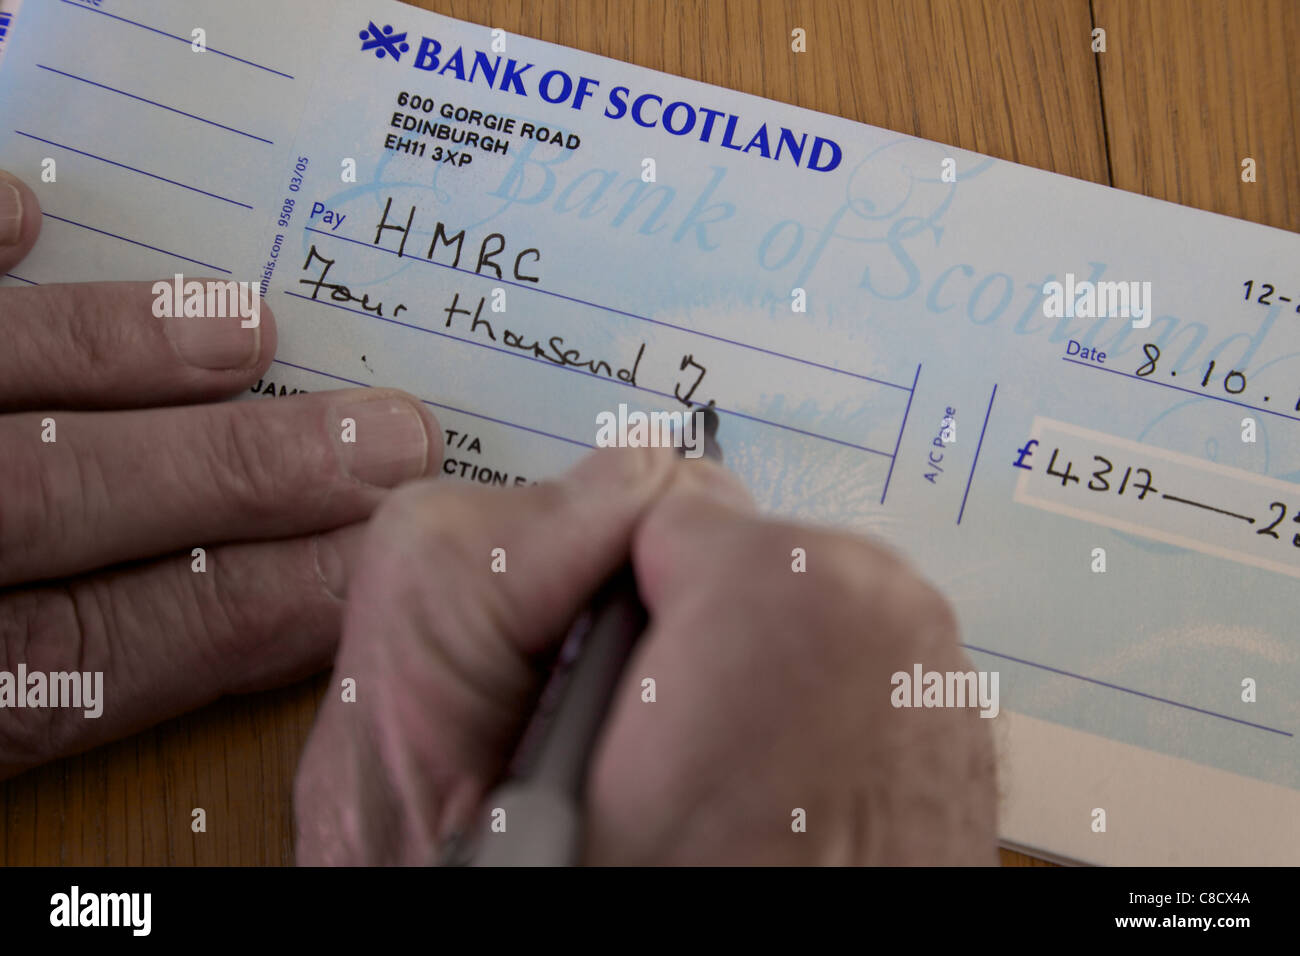 Writing a cheque for HMRC tax, England Stock Photo - Alamy